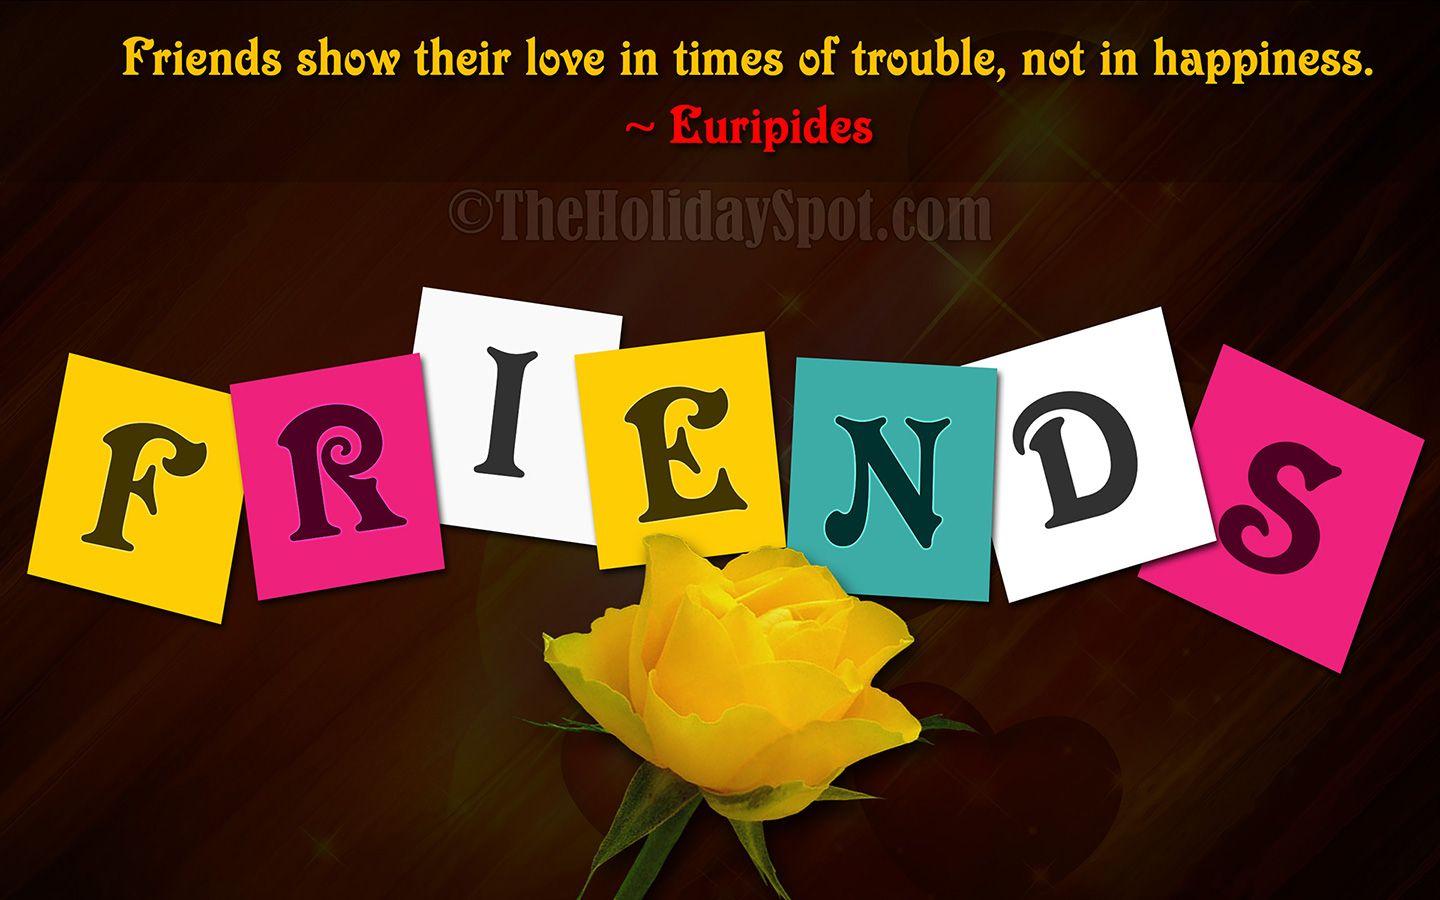 Friendship Day Wallpaper 2020. Friendship Image HD. Download Friendship Day Image